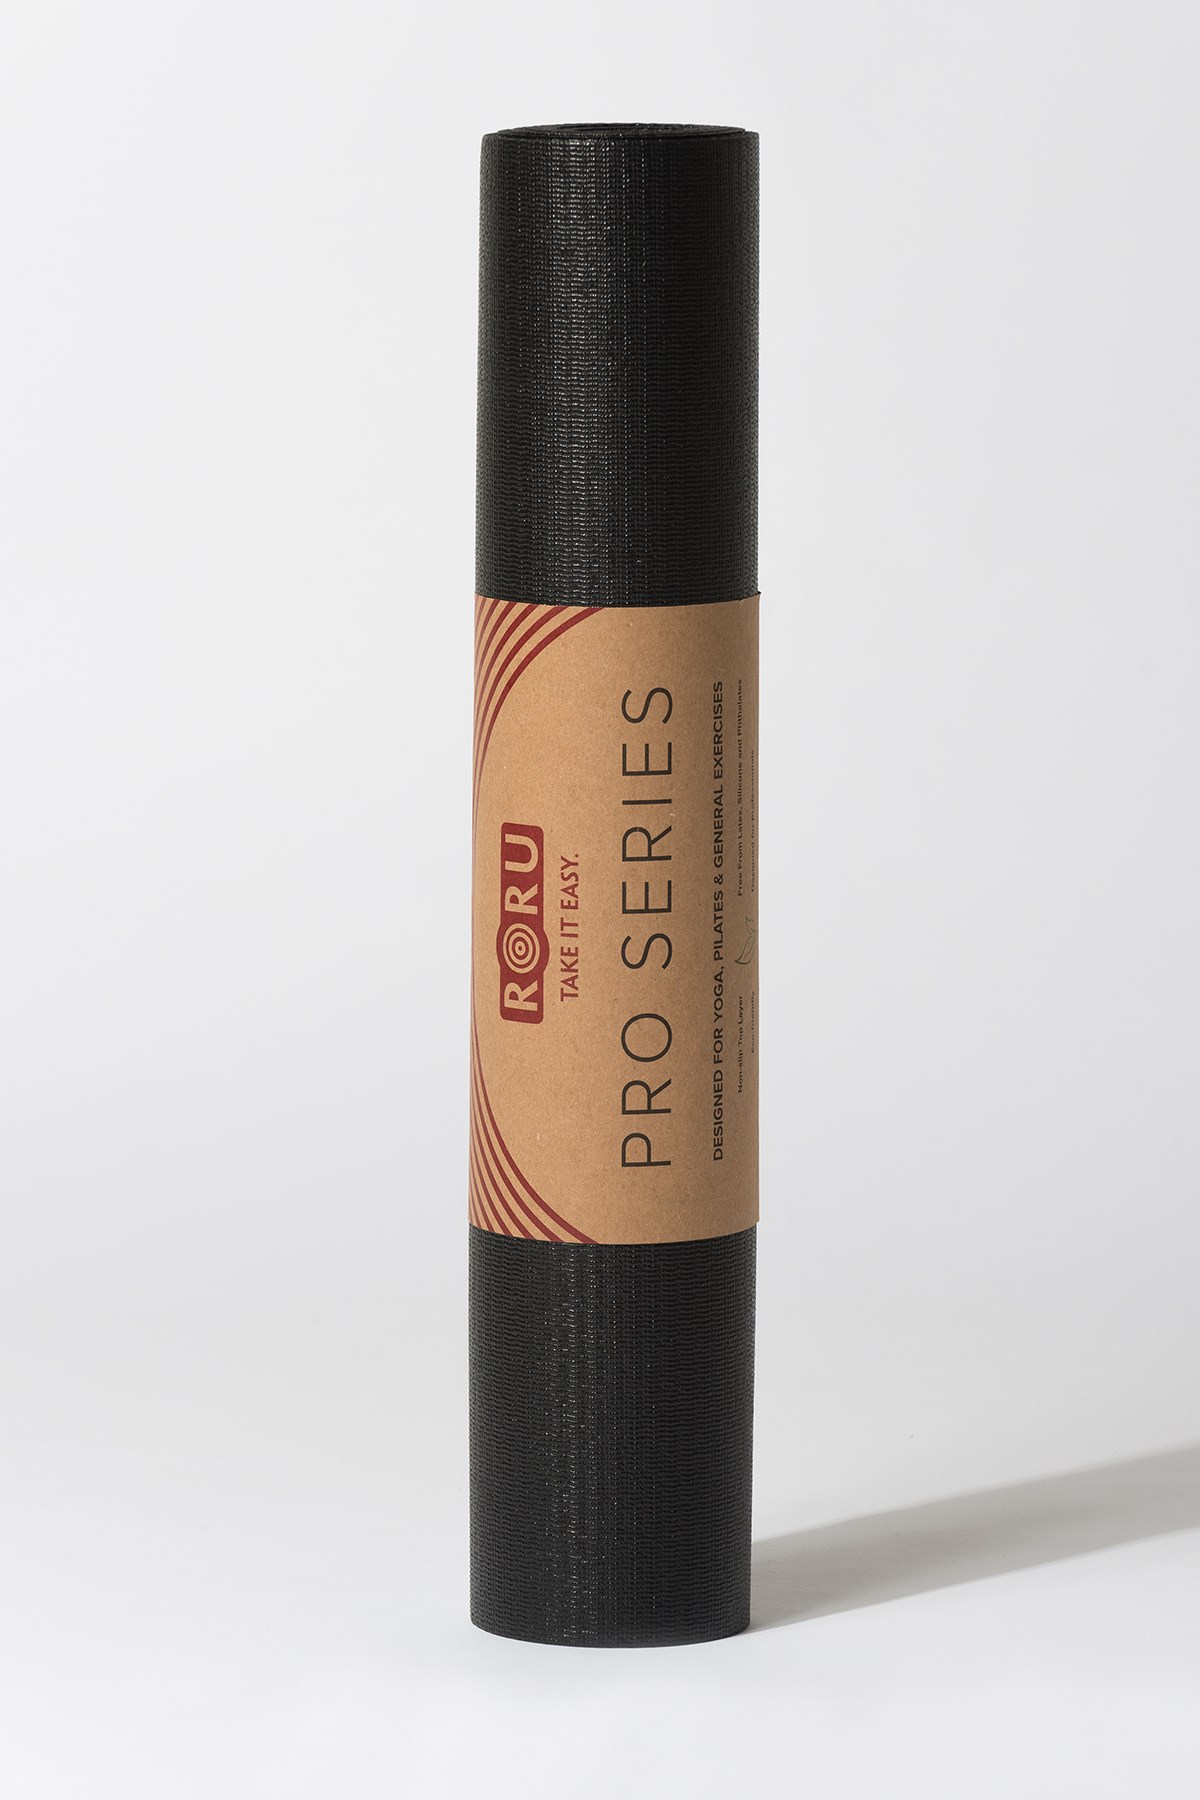 RORU Pro Serisi Siyah Yoga Matı - 6 mm